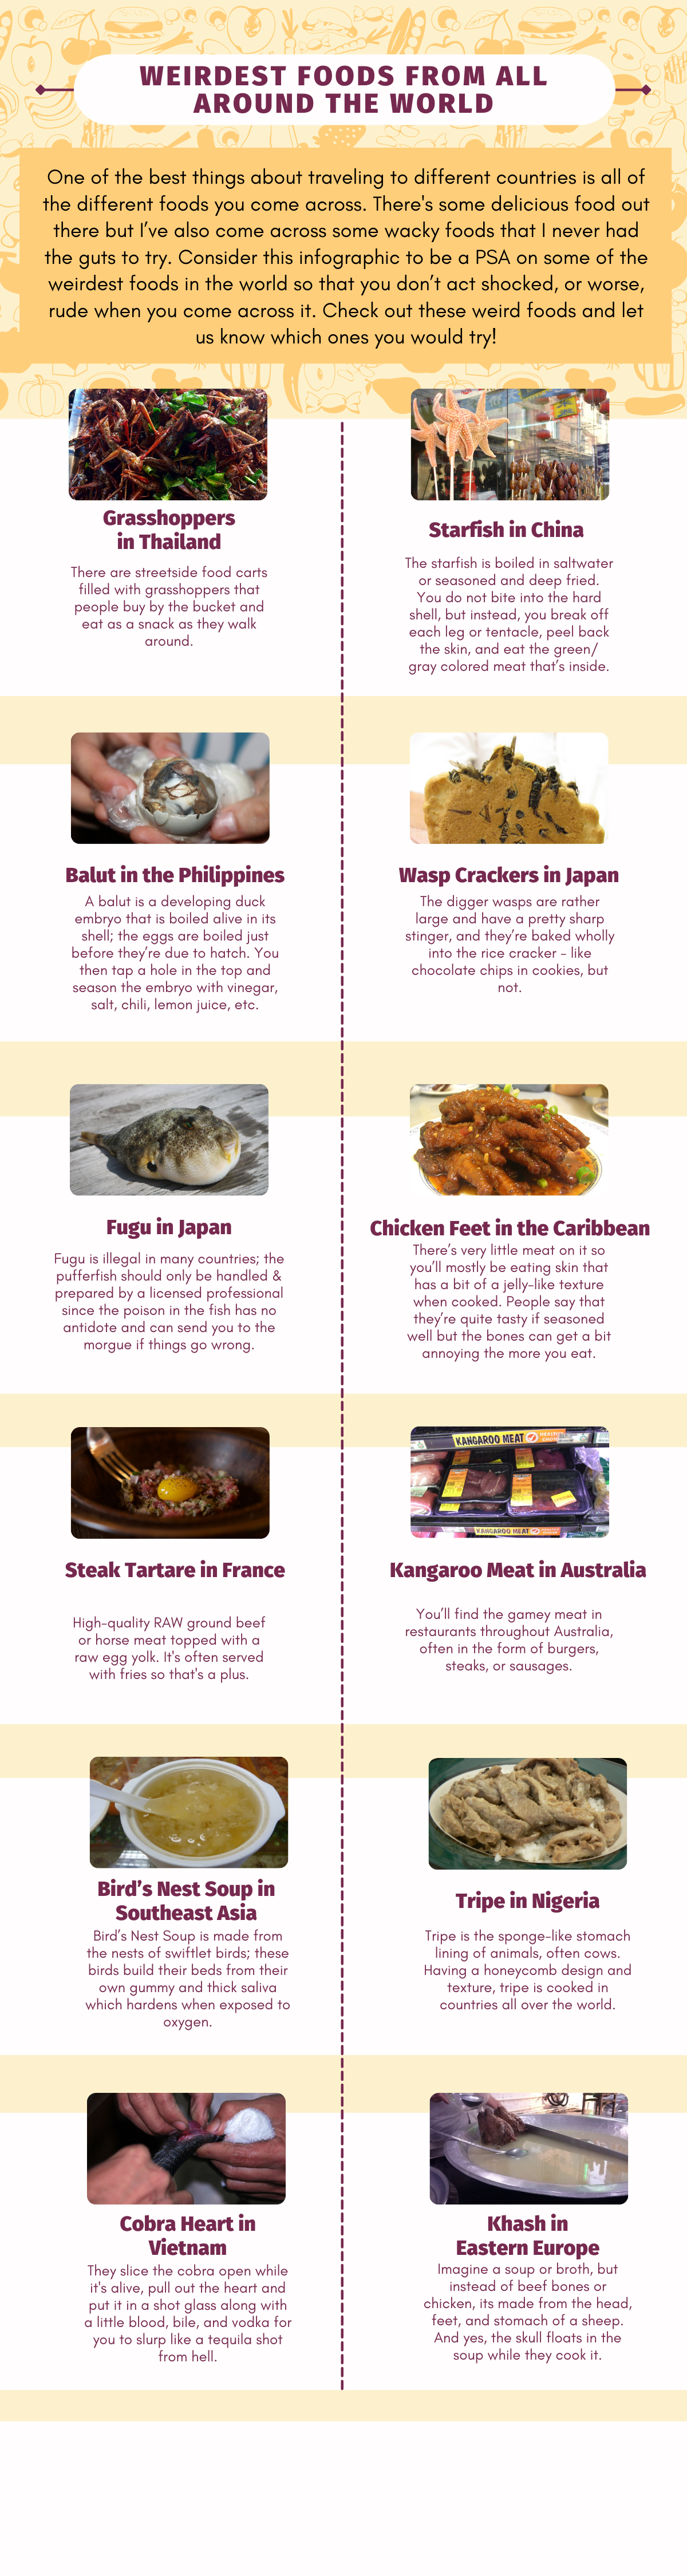 Weirdest foods from all around the world infographic